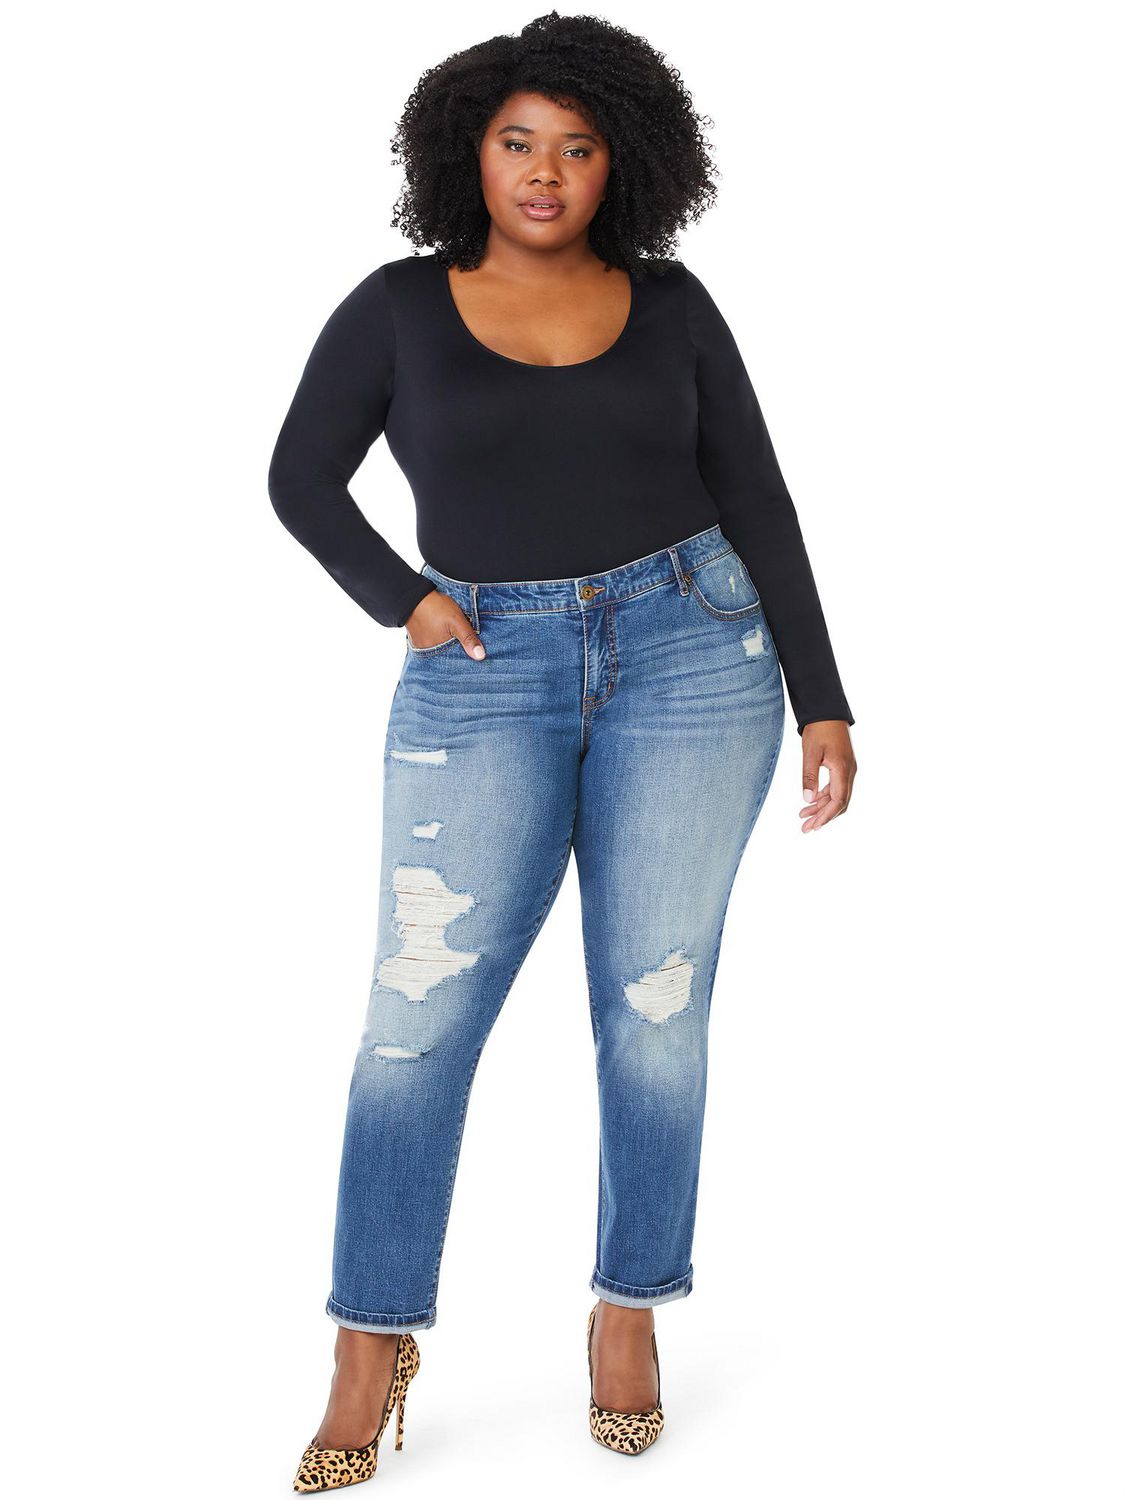 Sofia Jeans by Sofia Vergara Plus Size Bagi Boyfriend Mid-Rise